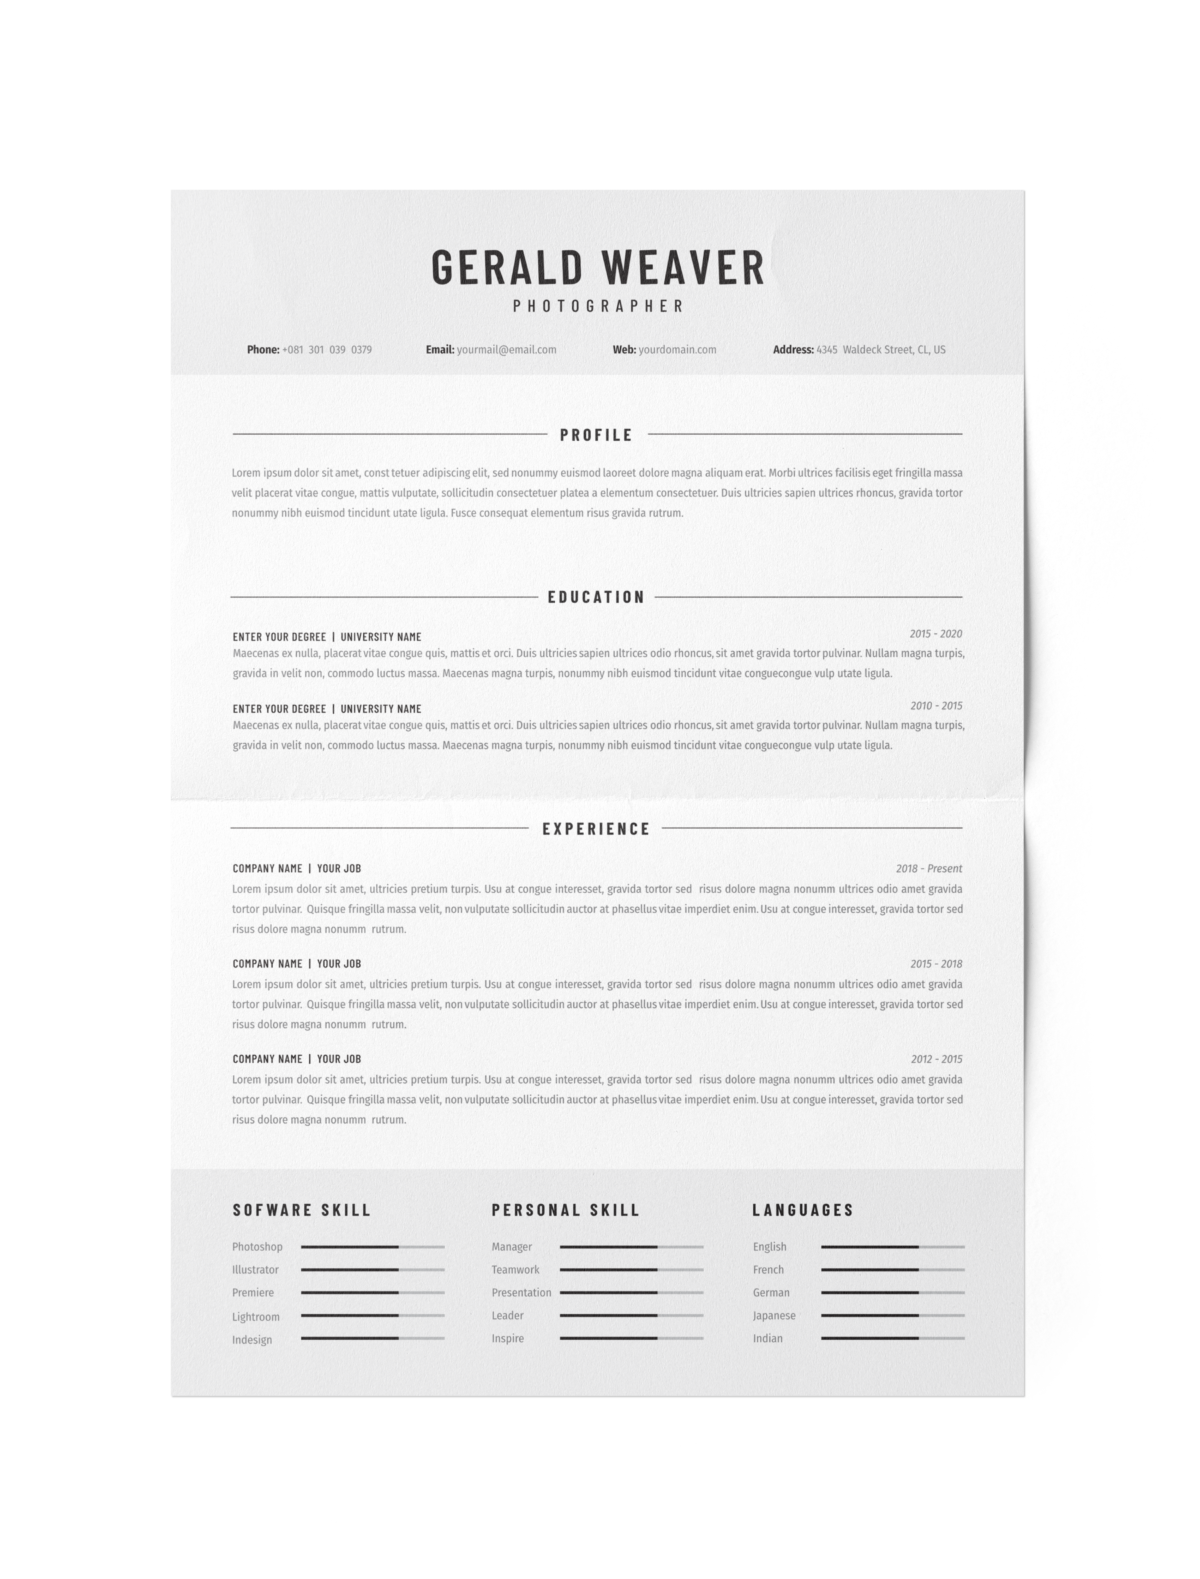 CV #58 Gerald Weaver